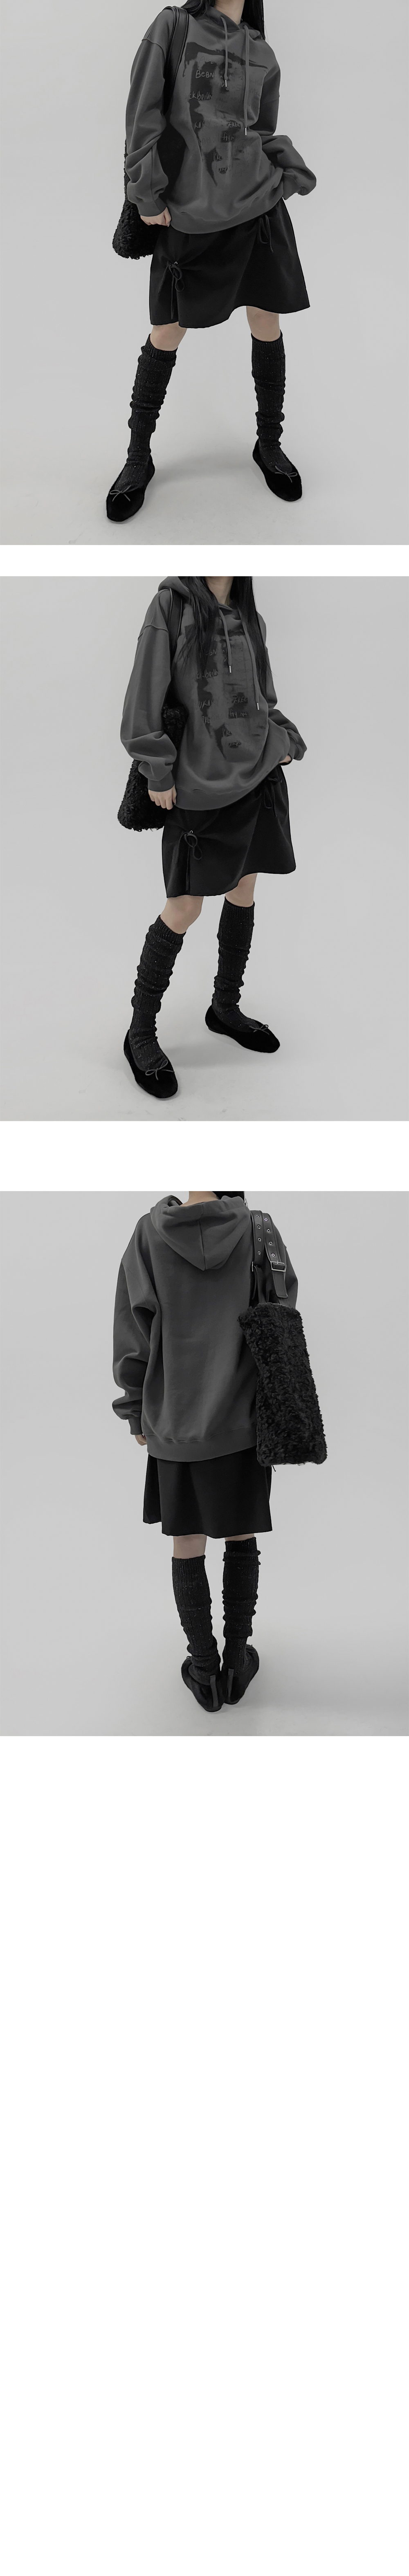 mini skirt grey color image-S1L14